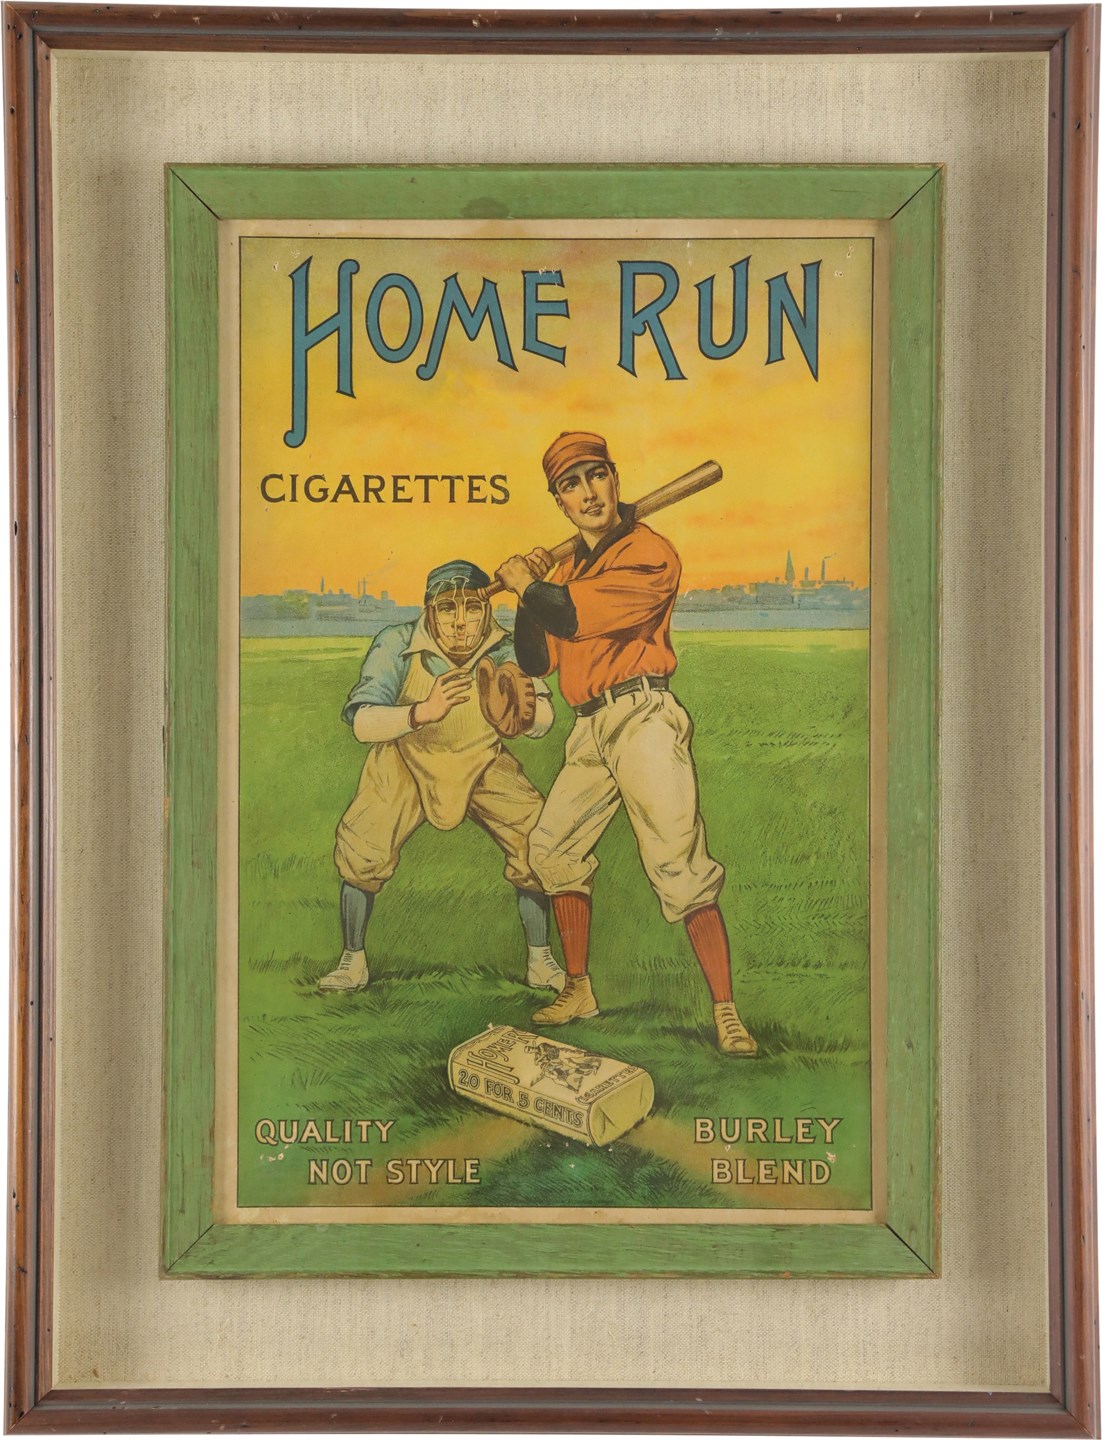 - Circa 1910s Home Run Cigarettes Advertising Poster in Original Frame